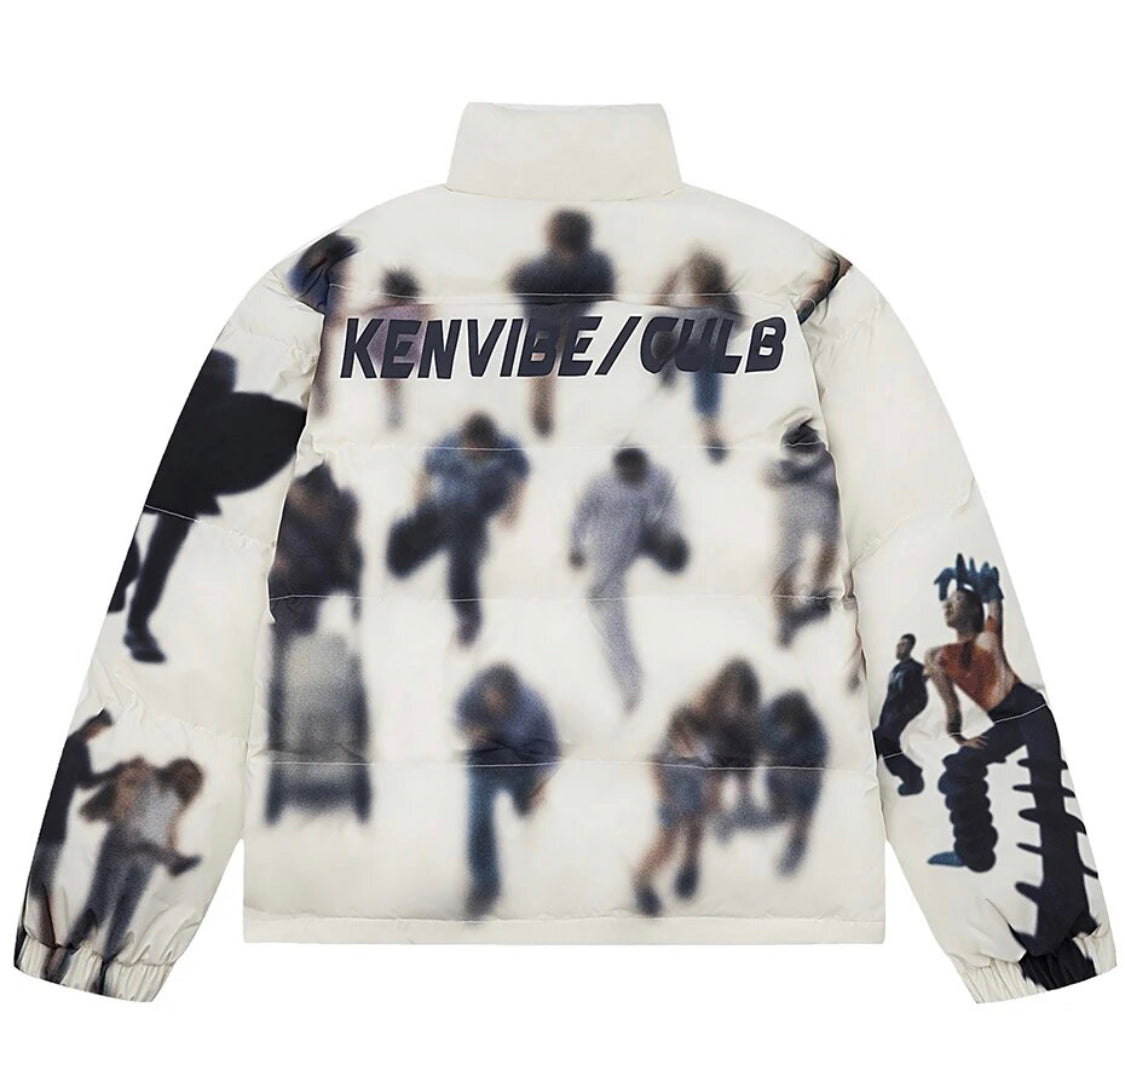 Art Kenvibe Club Puffer Jacket